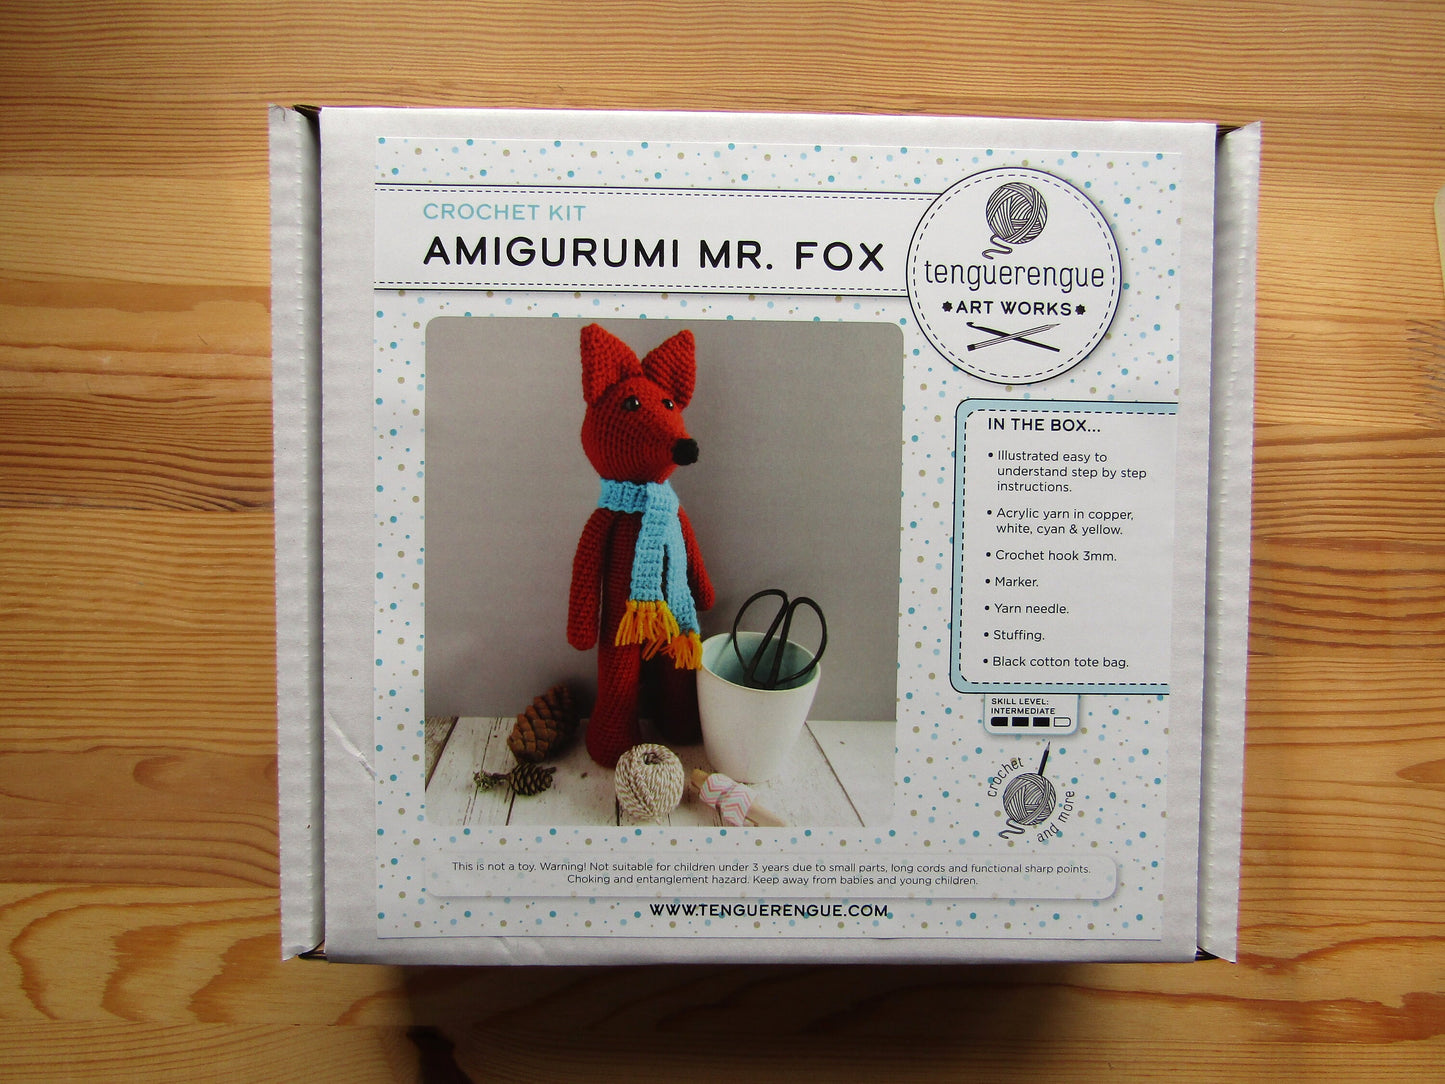 Crochet kit: Amigurumi Mr. Fox